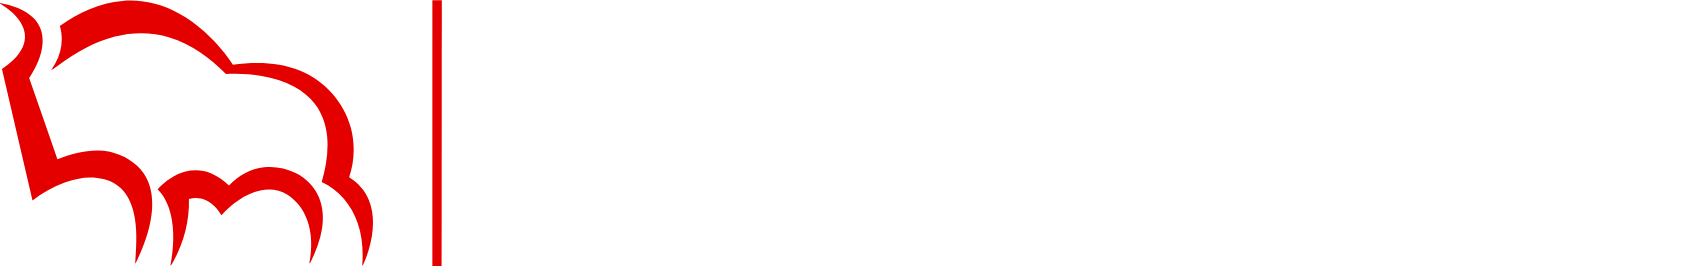 Bank Pekao (Bank Polska Kasa Opieki) logo grand pour les fonds sombres (PNG transparent)